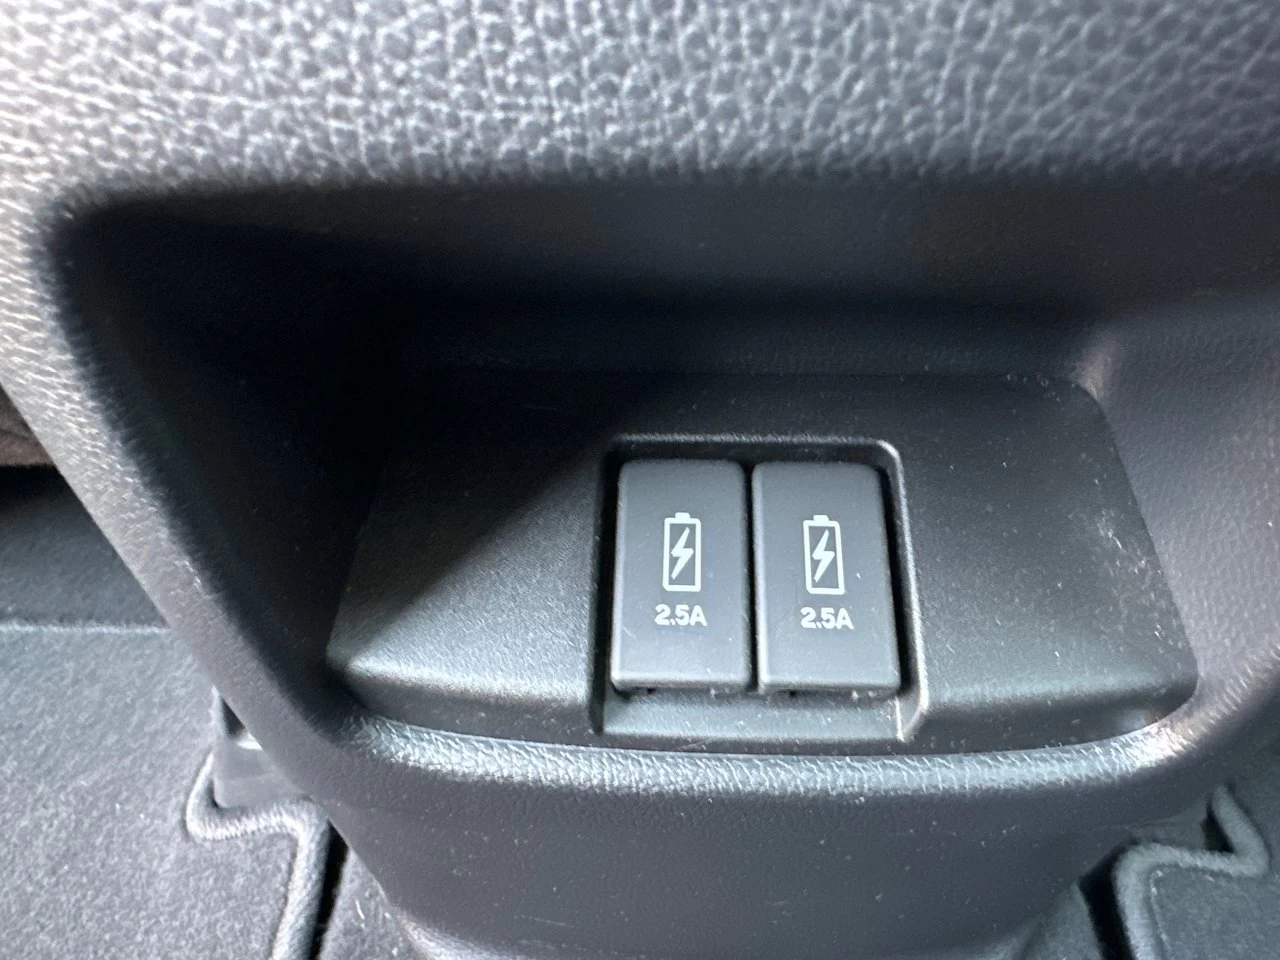 2018 Honda CR-V Touring Main Image